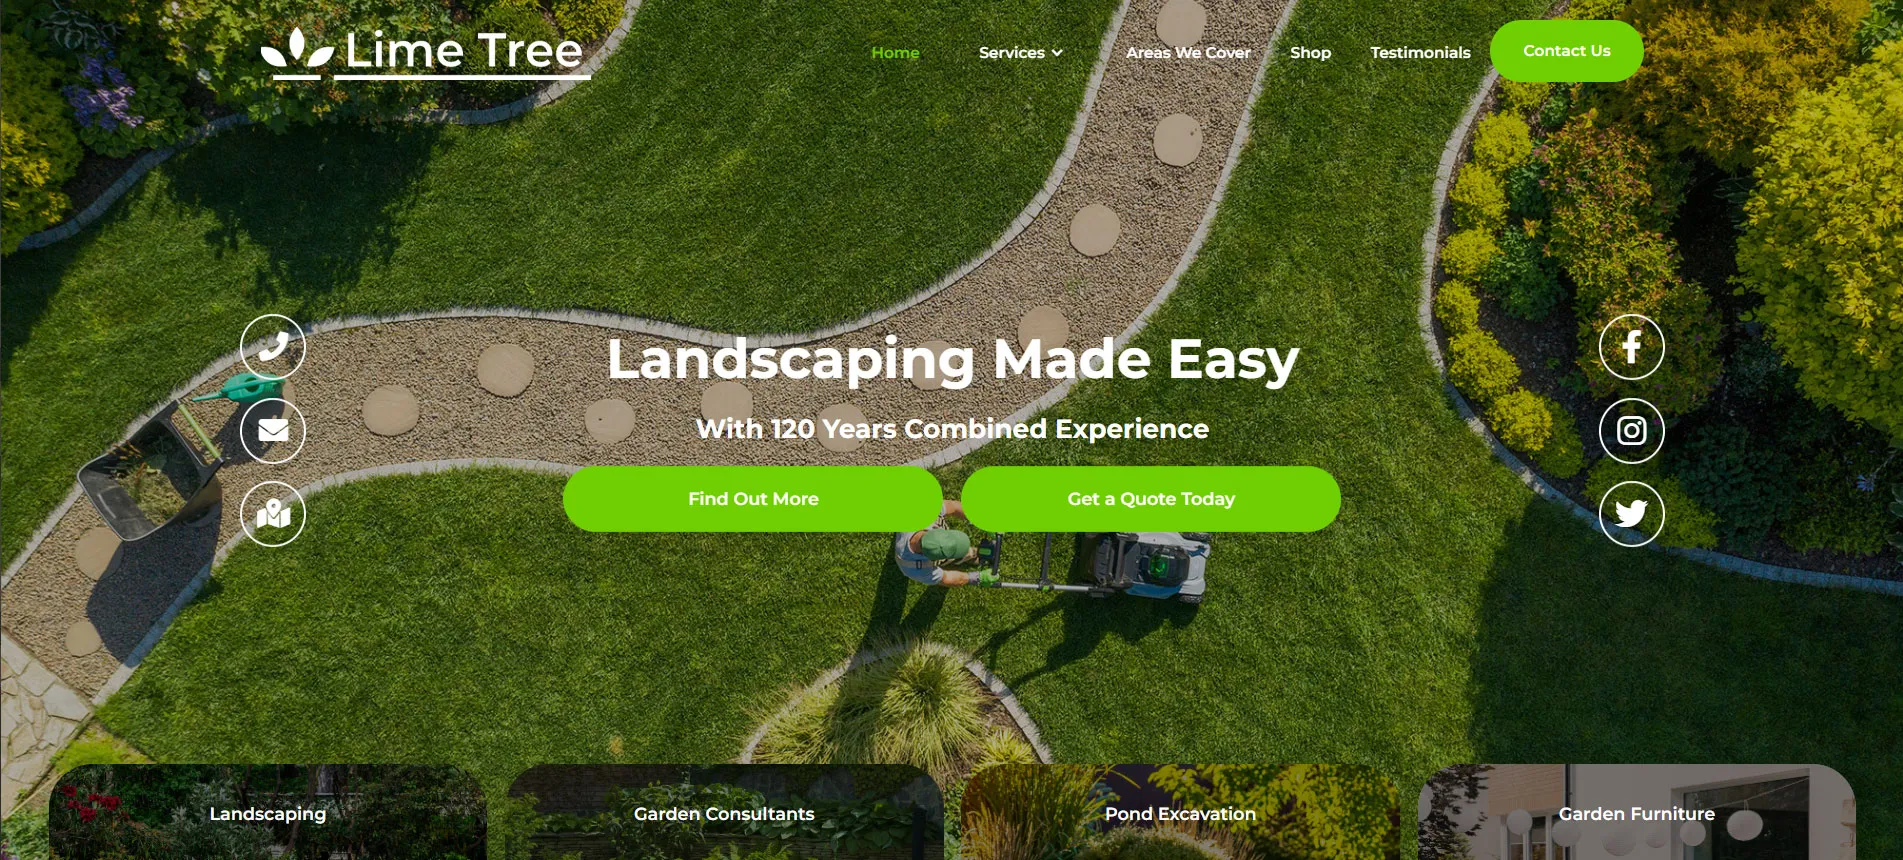 Lime Tree Website Theme